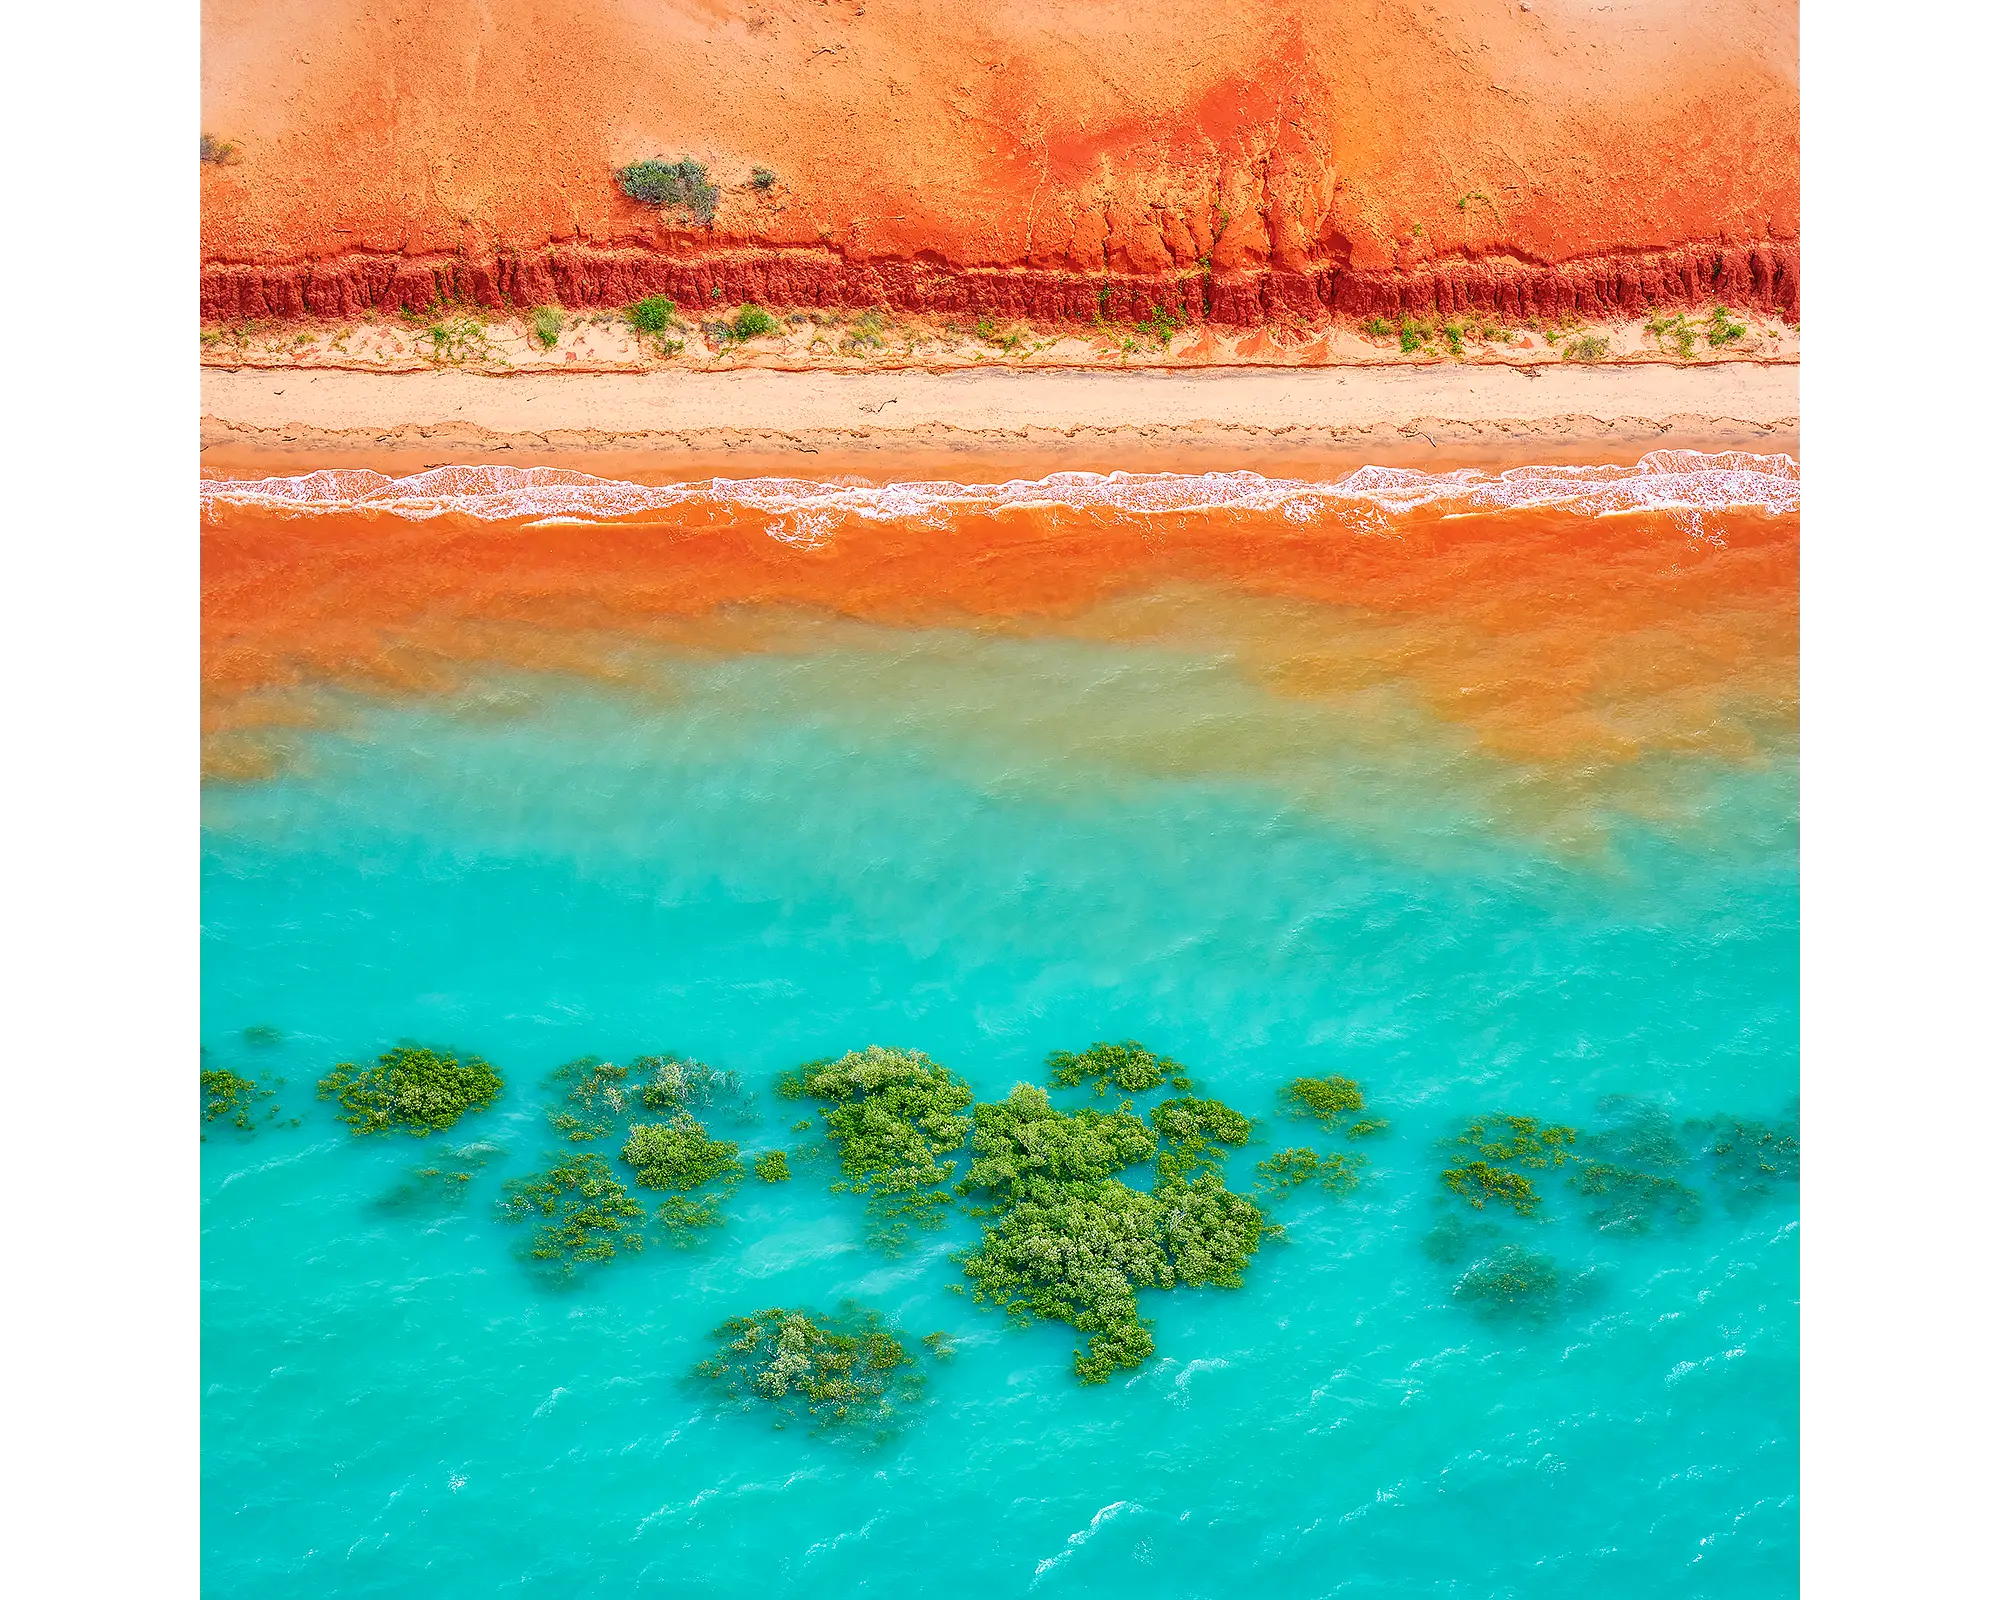 Aerial view of Broome Beach, The Kimberley, Western Australia.